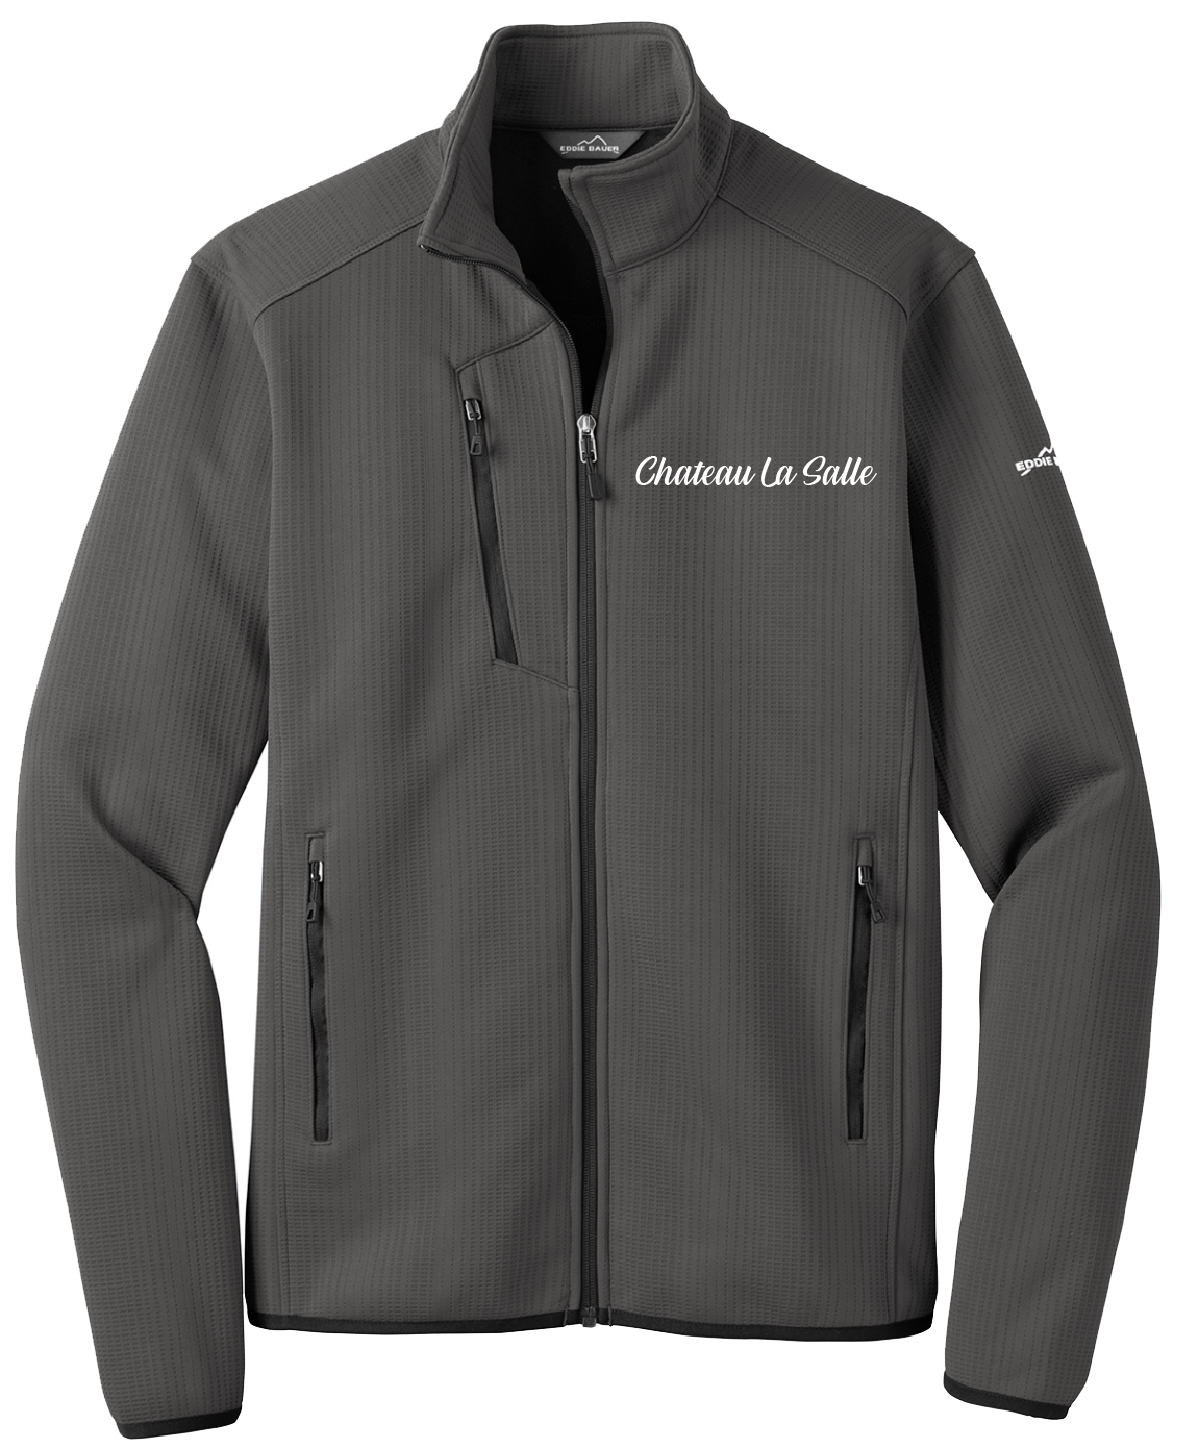 Chateau La Salle - Mens - Eddie Bauer ® Dash Full-Zip Fleece Jacket